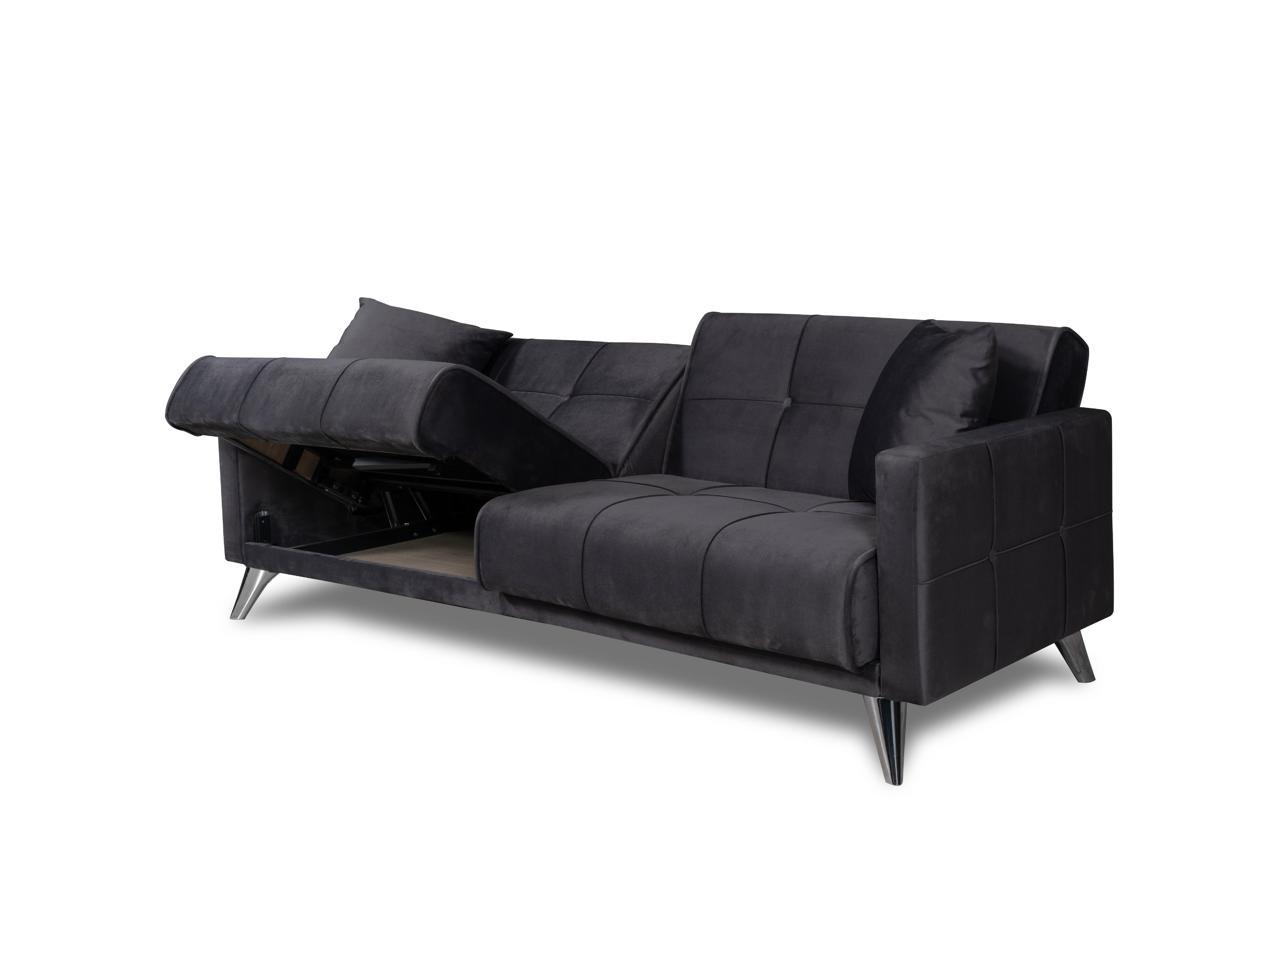 viscologic noble split back convertible futon sofa bed